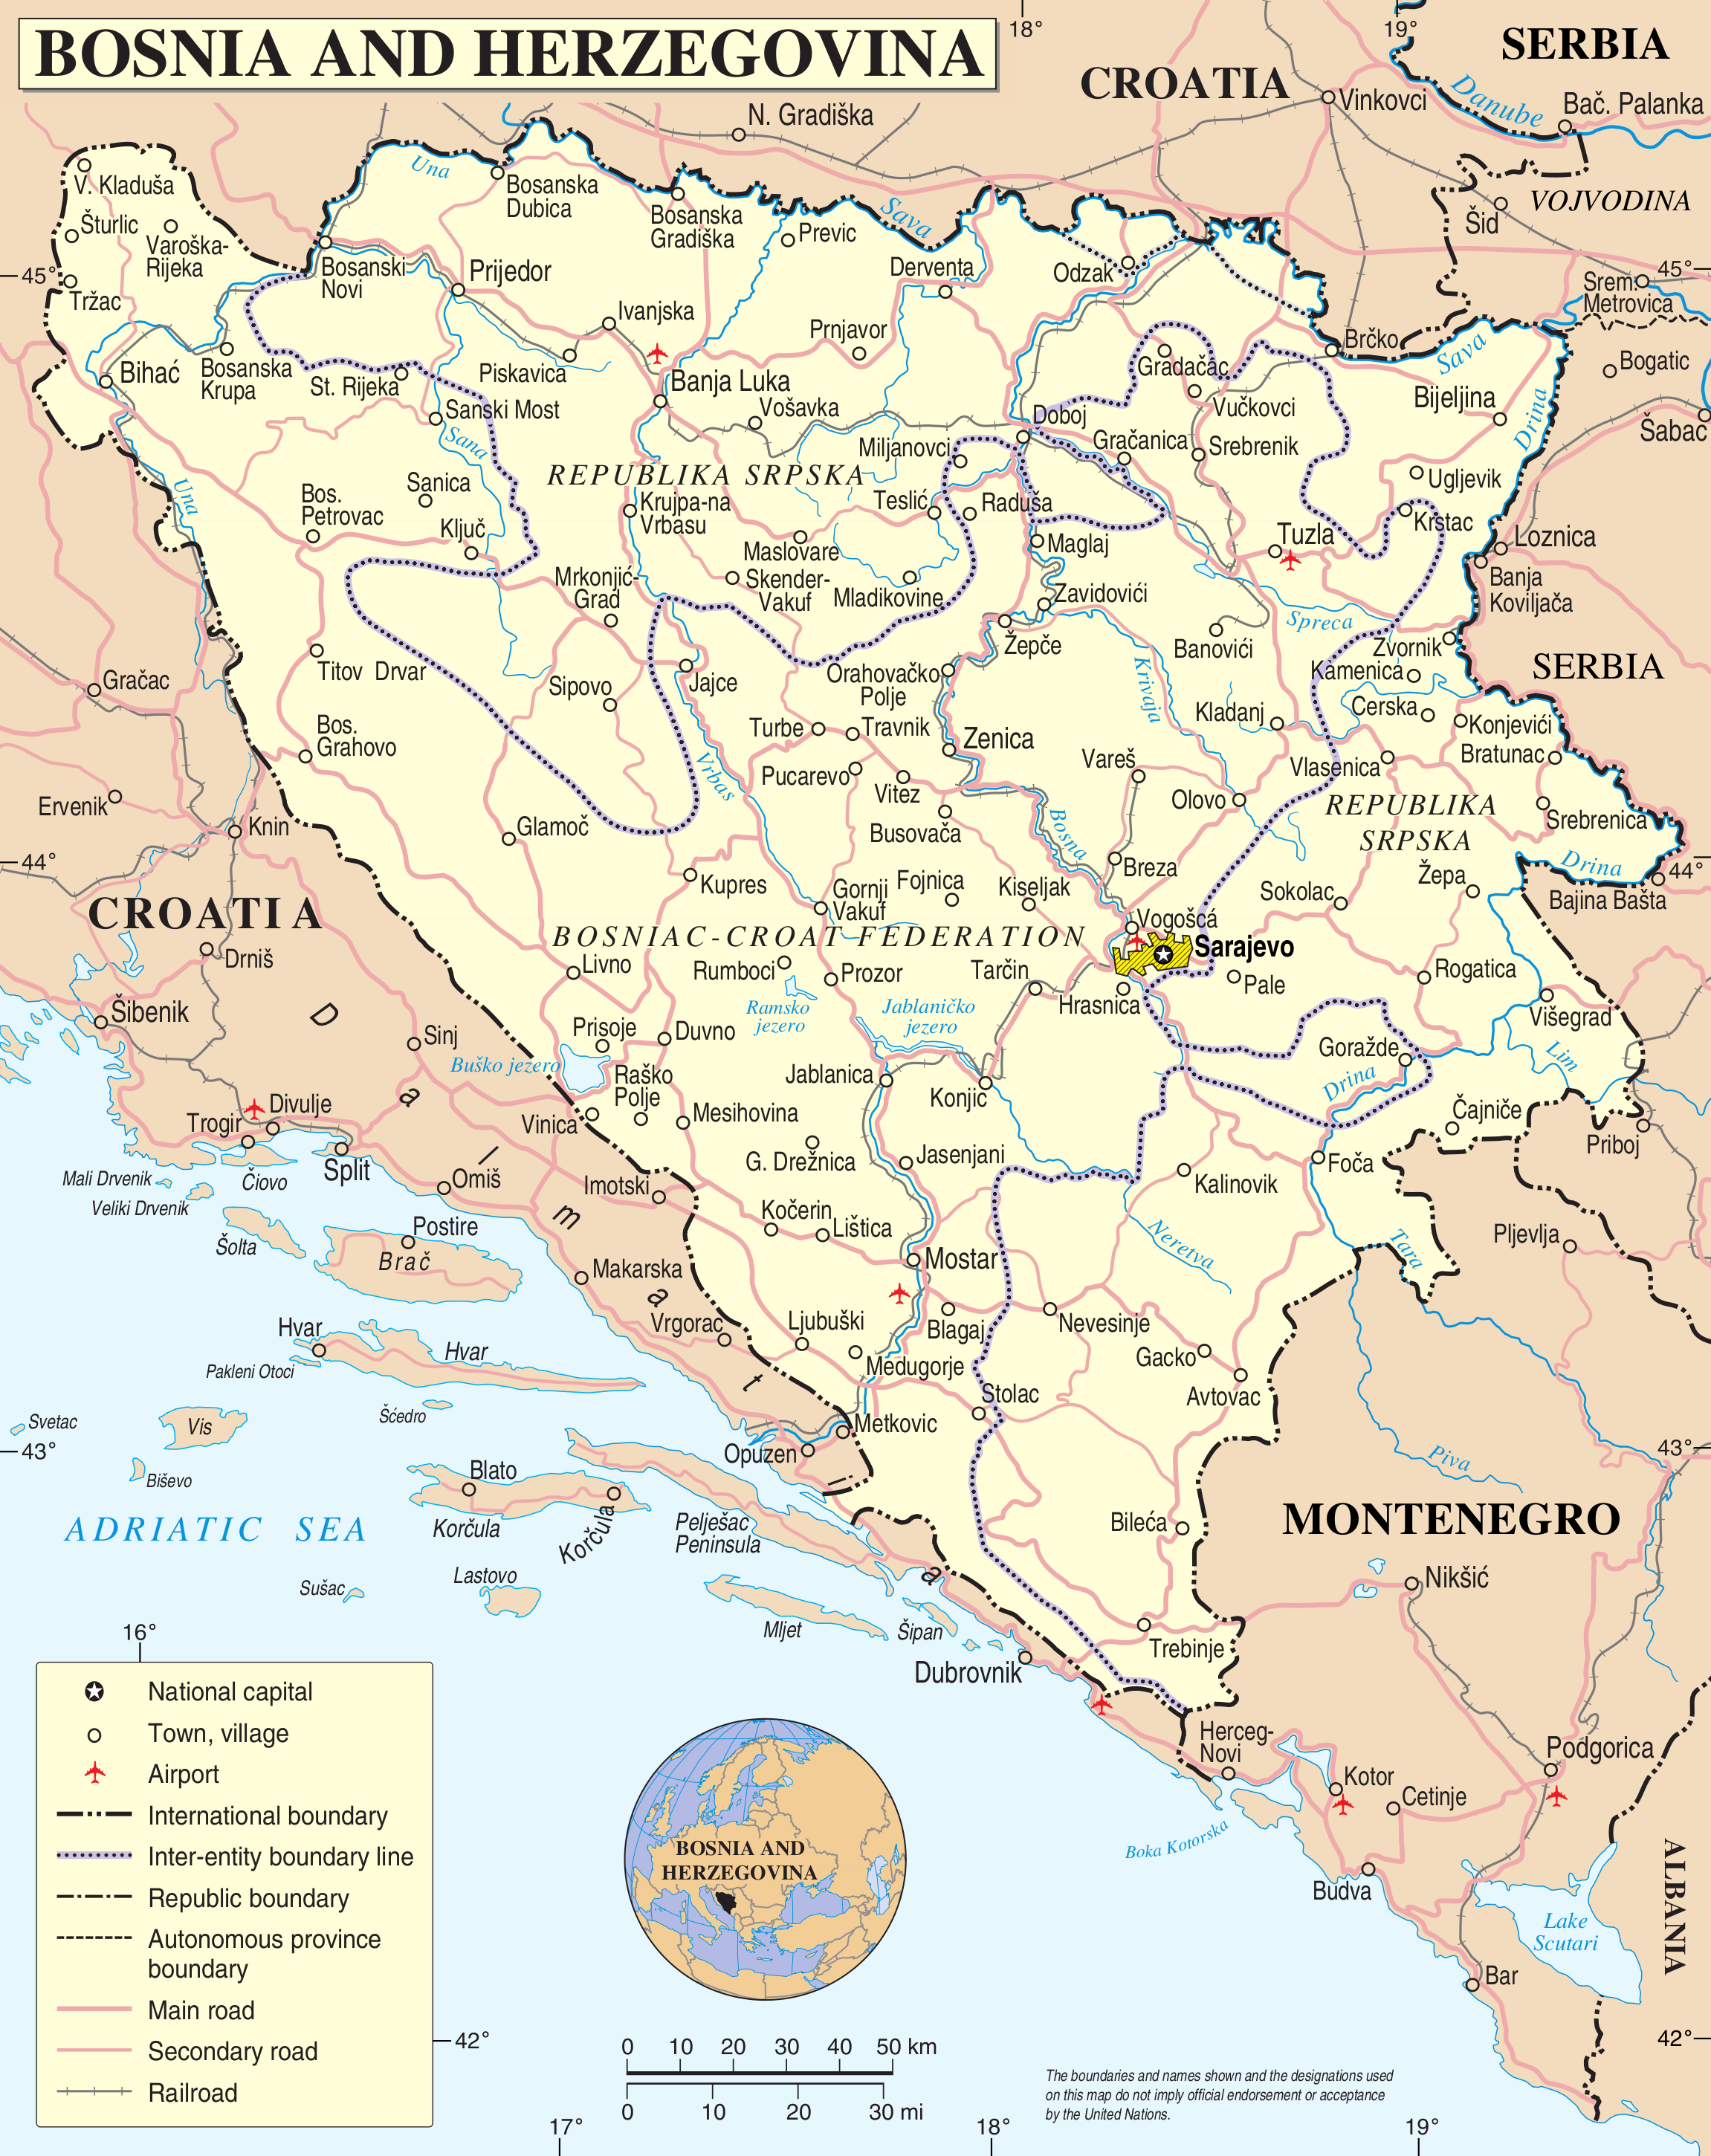 hercegovina mapa File:Bosnia and Hercegovina map.png   Wikimedia Commons hercegovina mapa